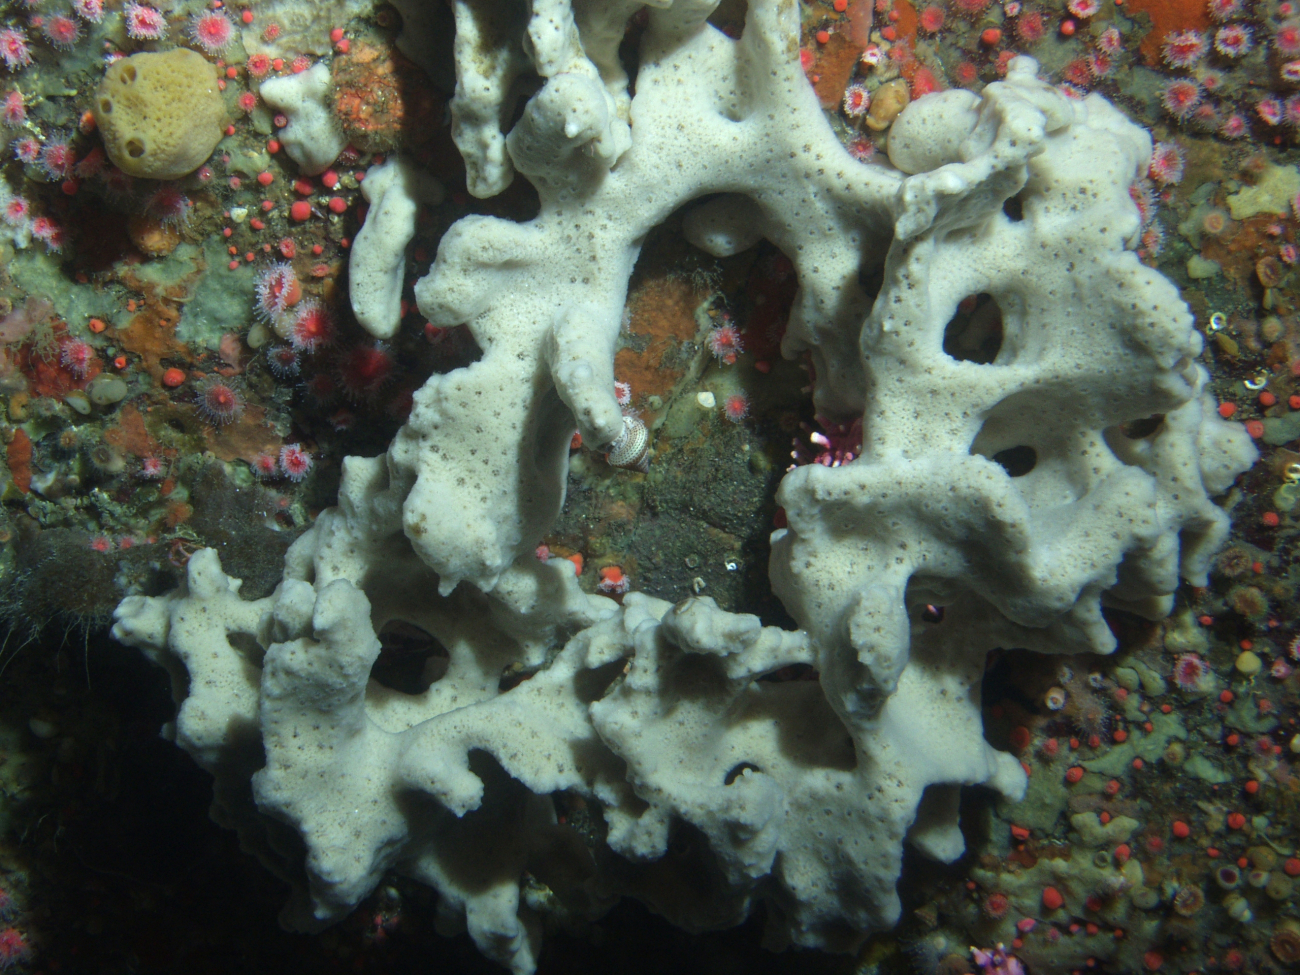 White Sponge (Ircinia campana) up close in reef habitatat 90 meters depth